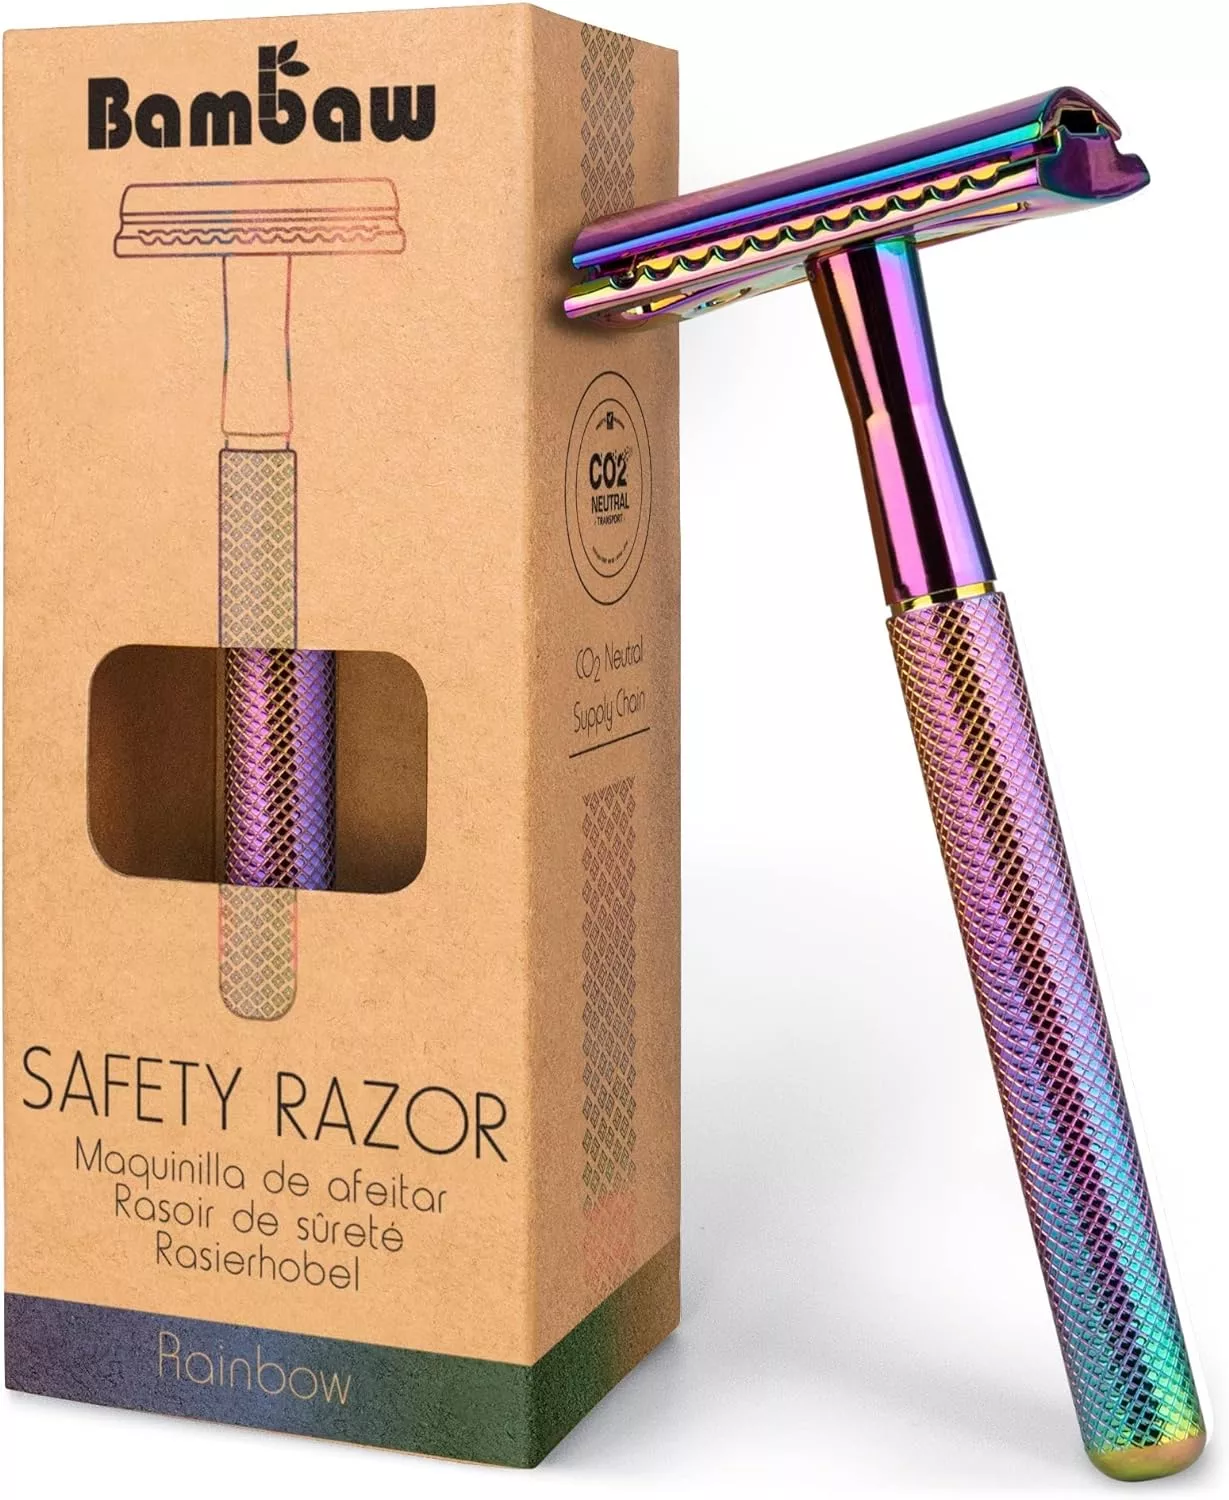 Metal safety razor from Bambaw brand